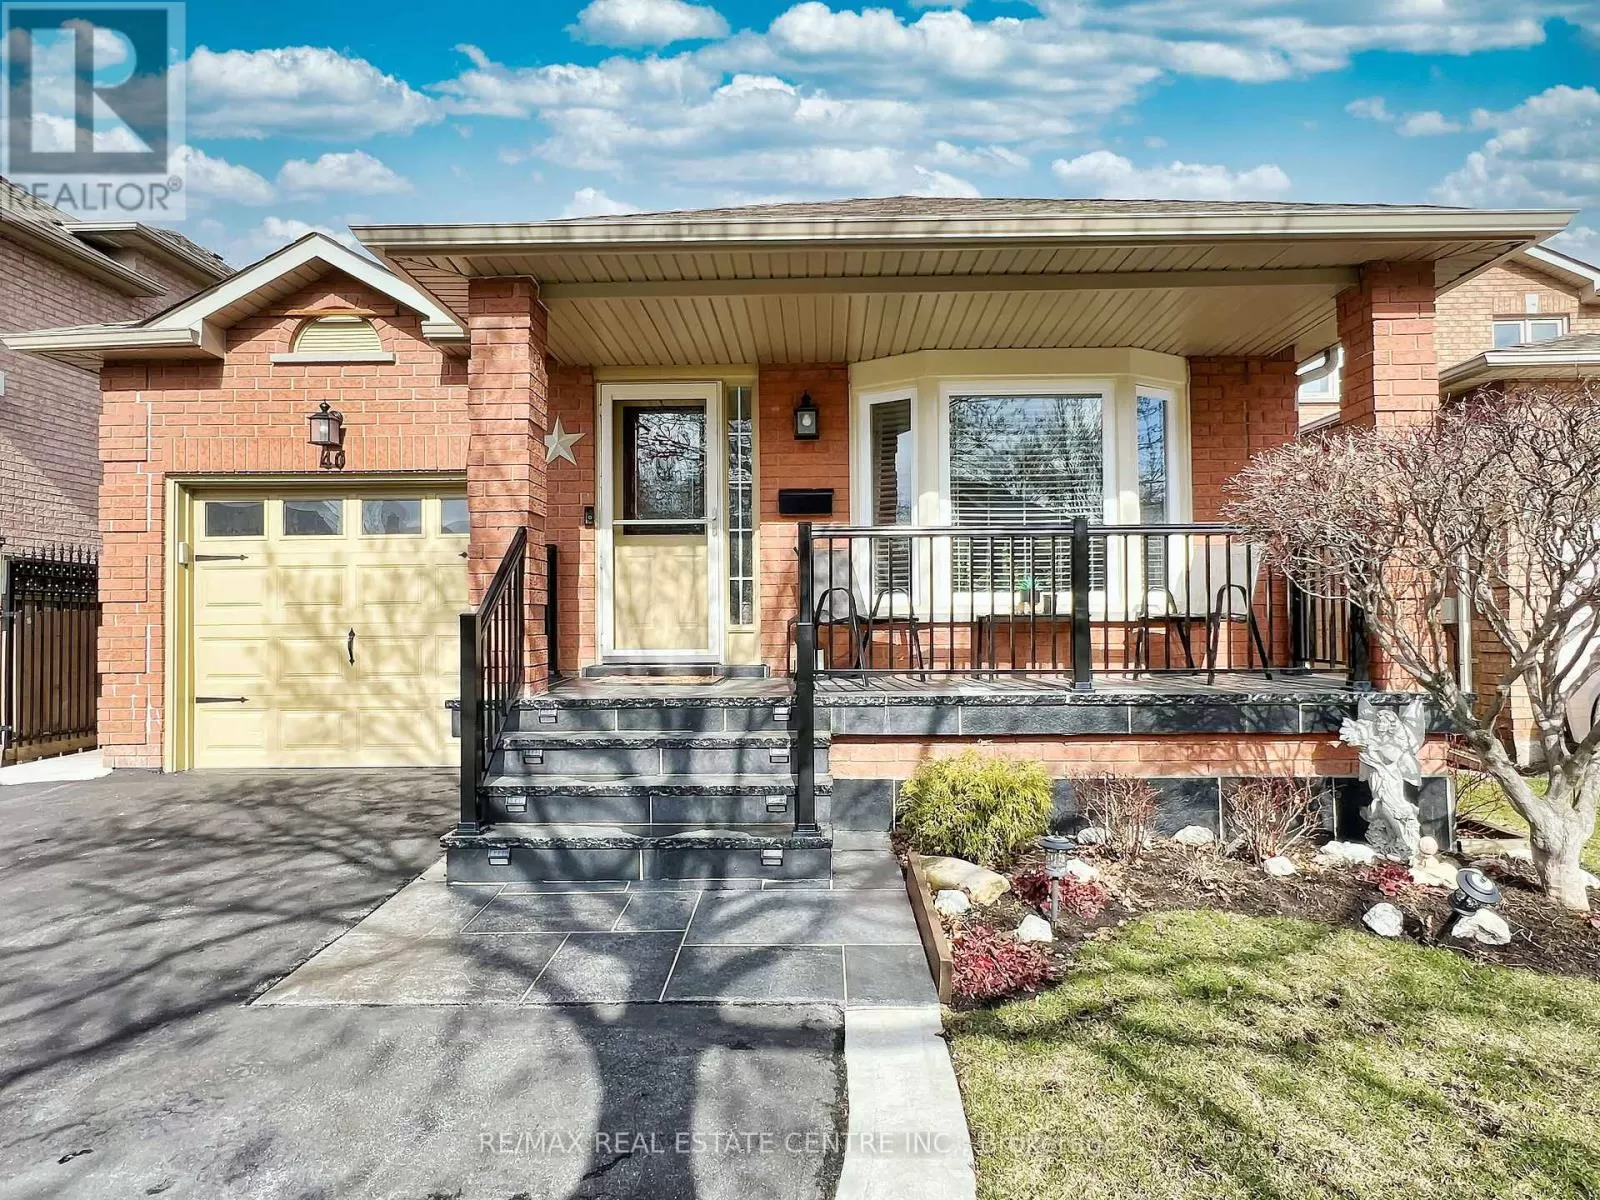 House for rent: 40 Braemore Rd, Brampton, Ontario L6X 1E5